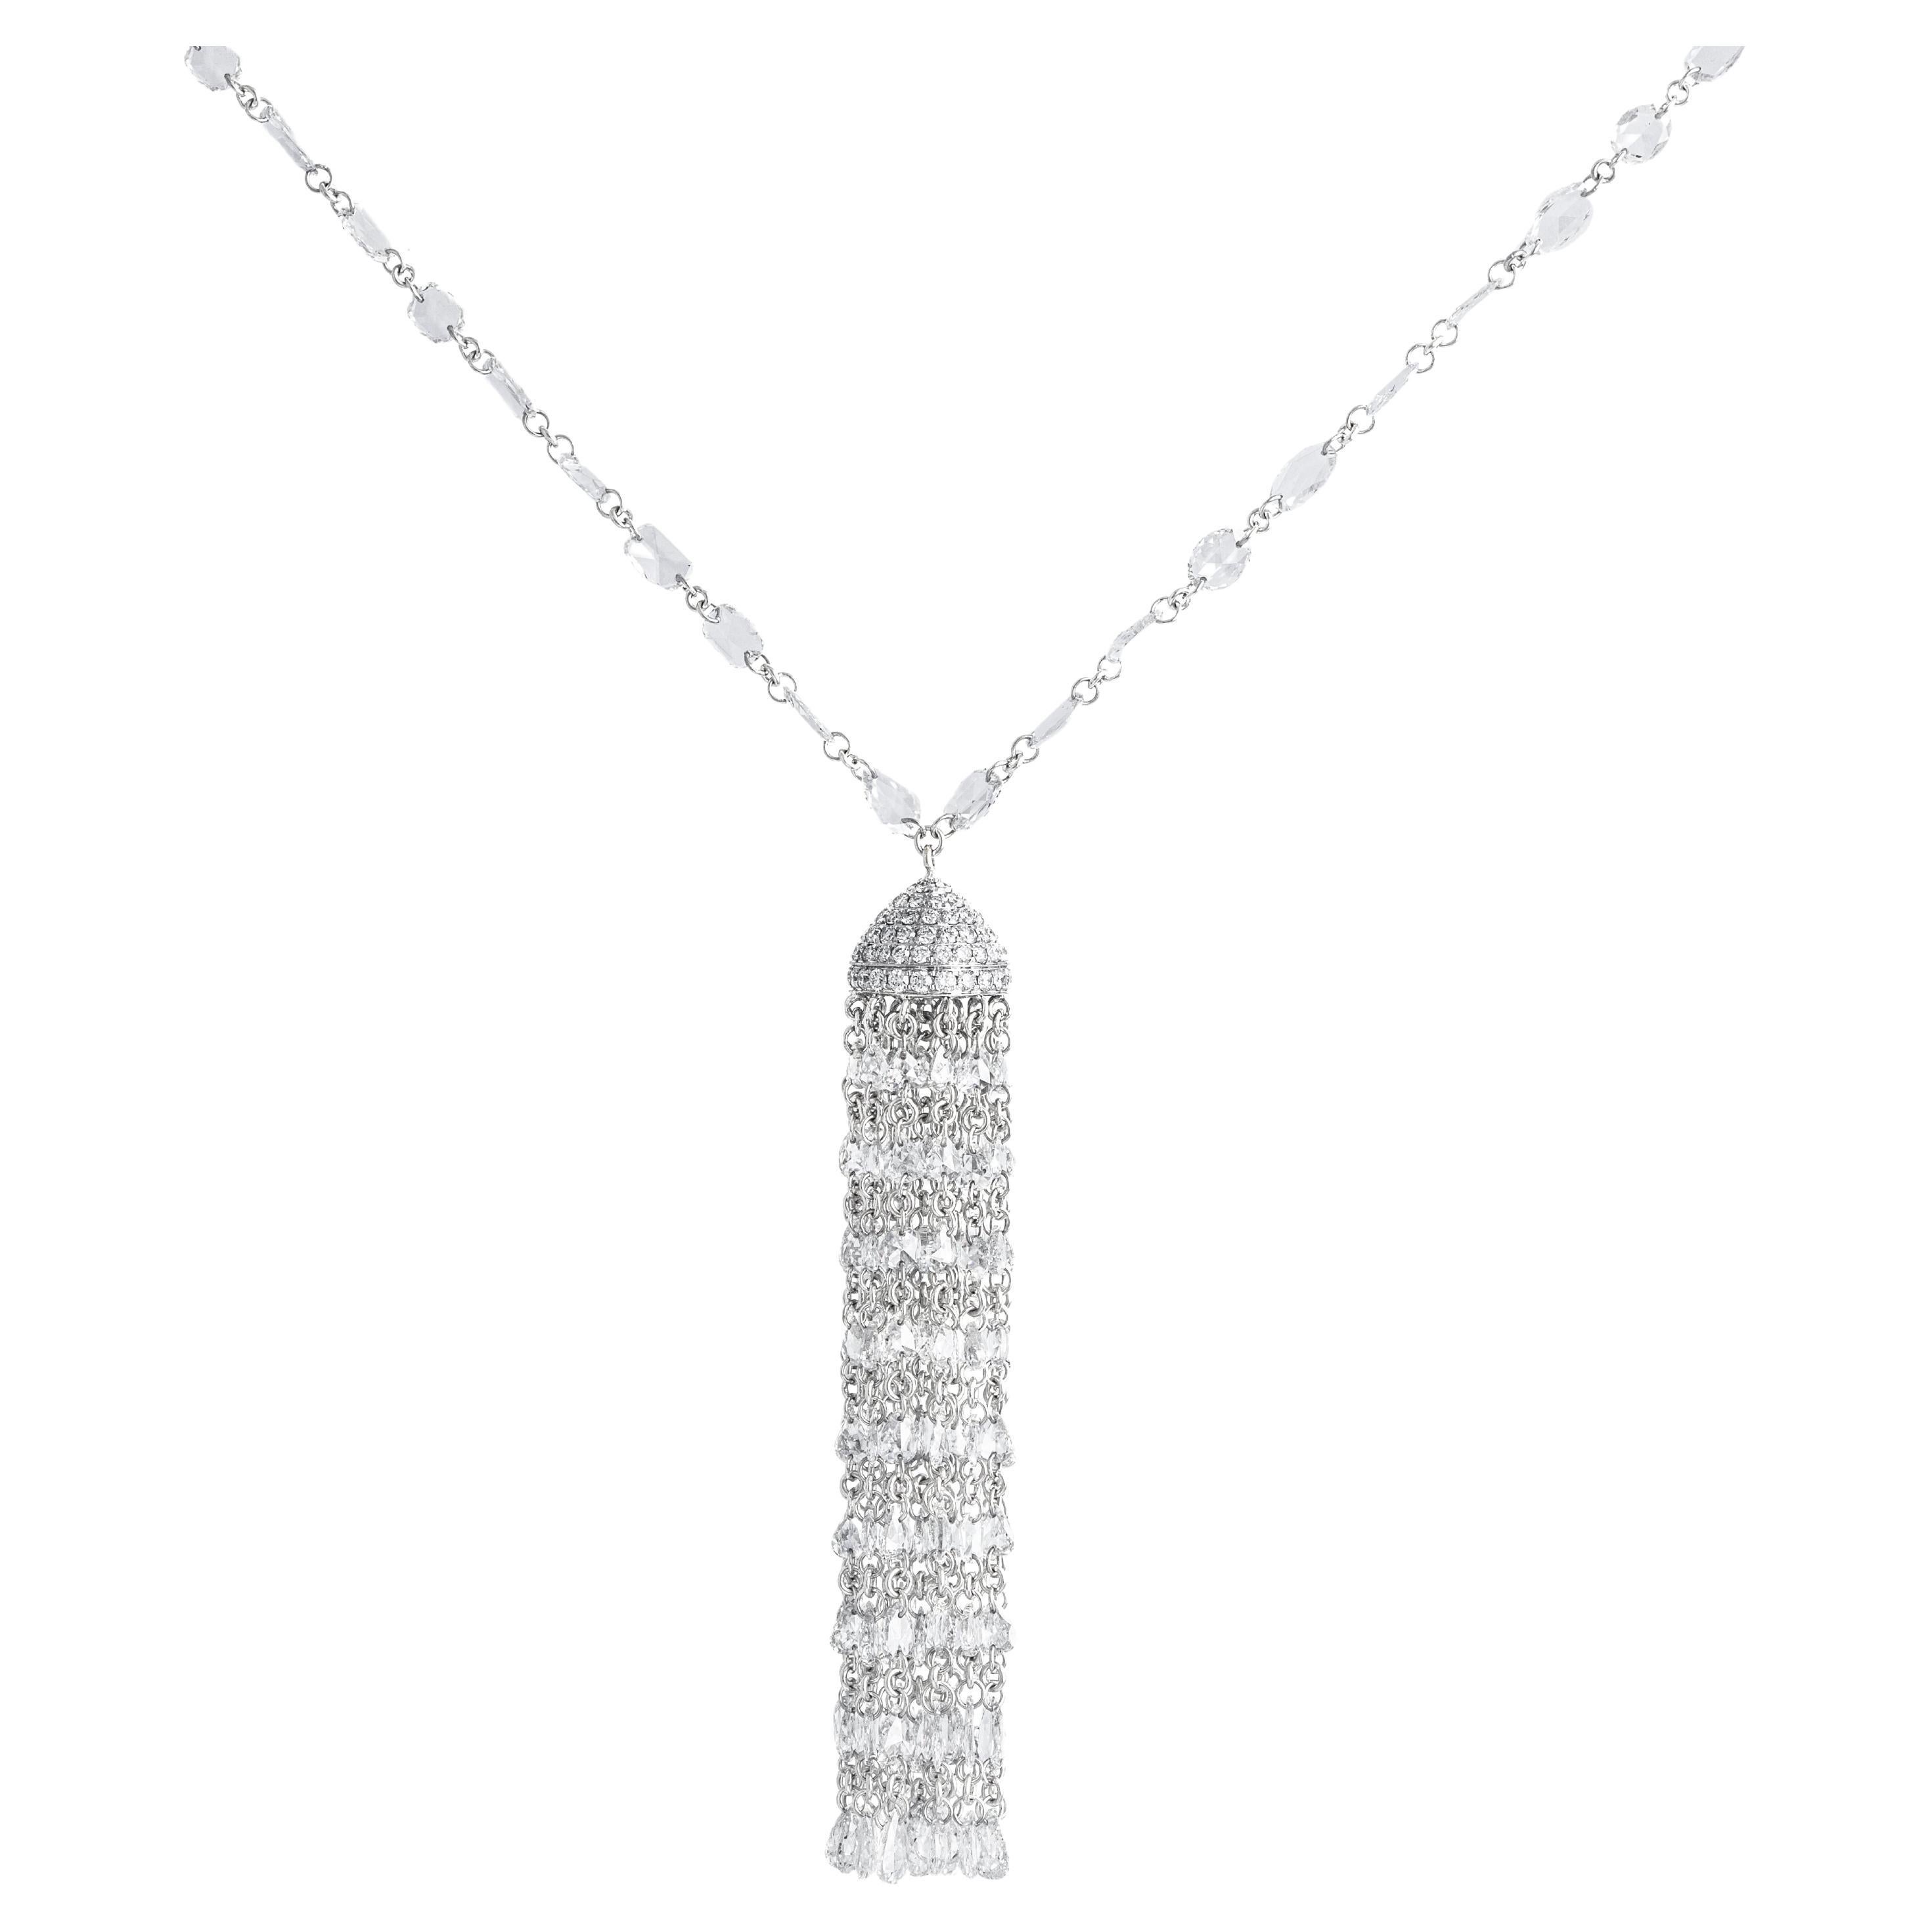 Necklace Sautoir Diamond White Gold 18K For Sale